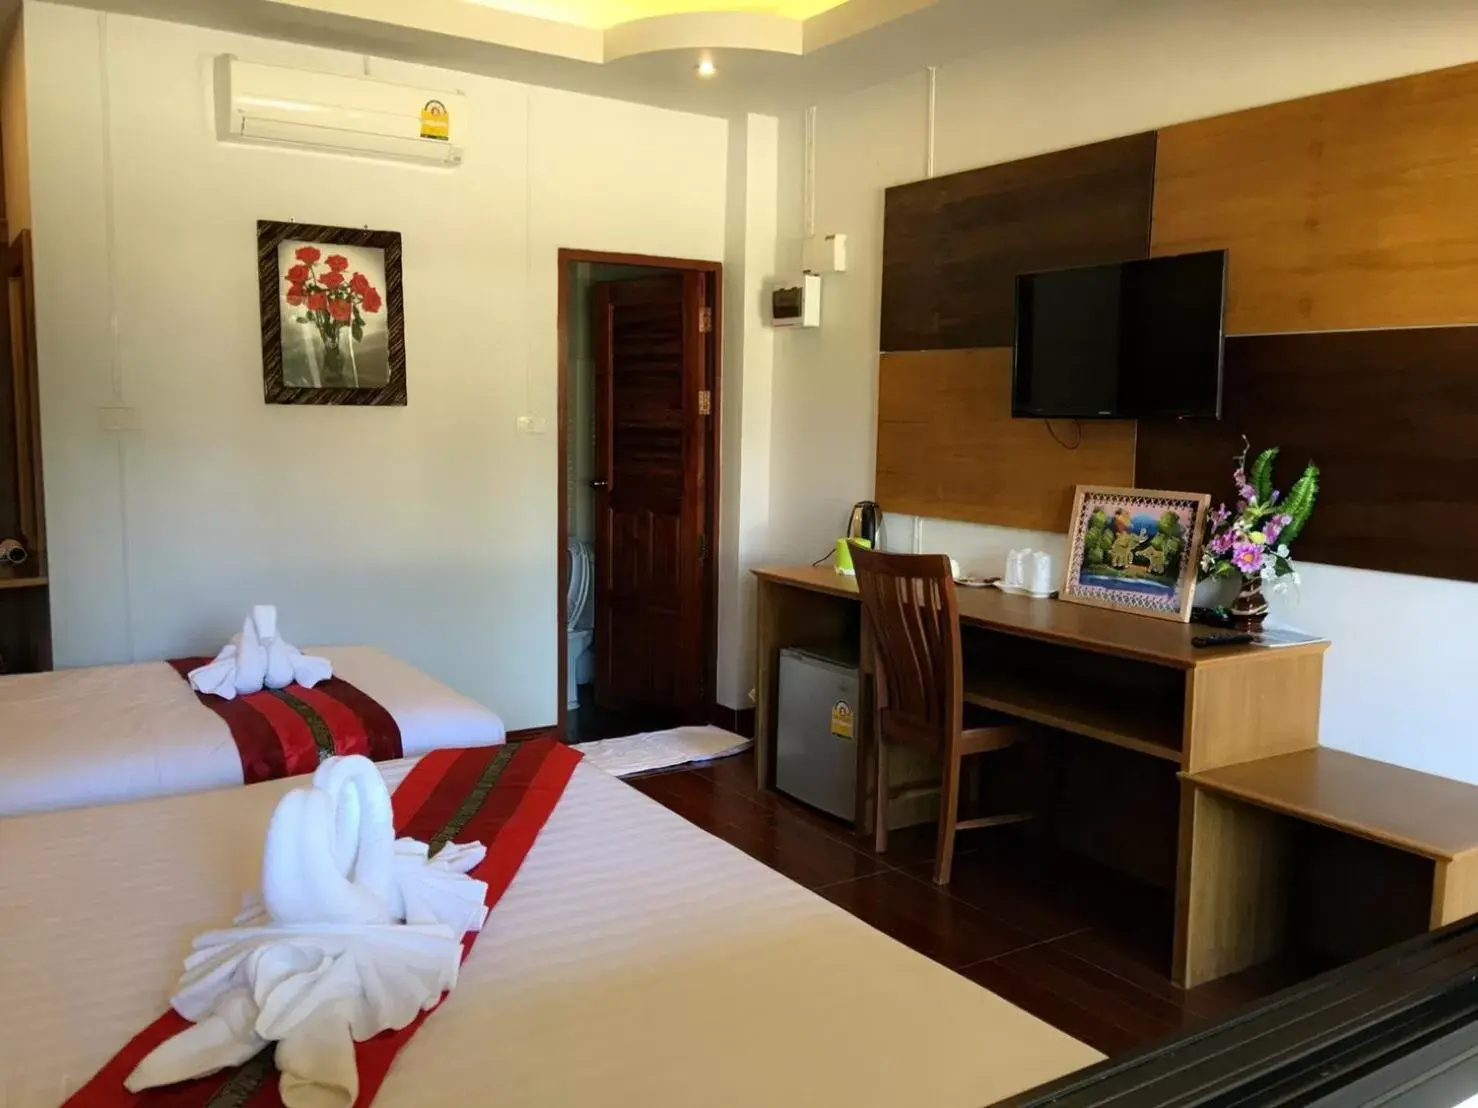 Bed in Hugpua Hotel